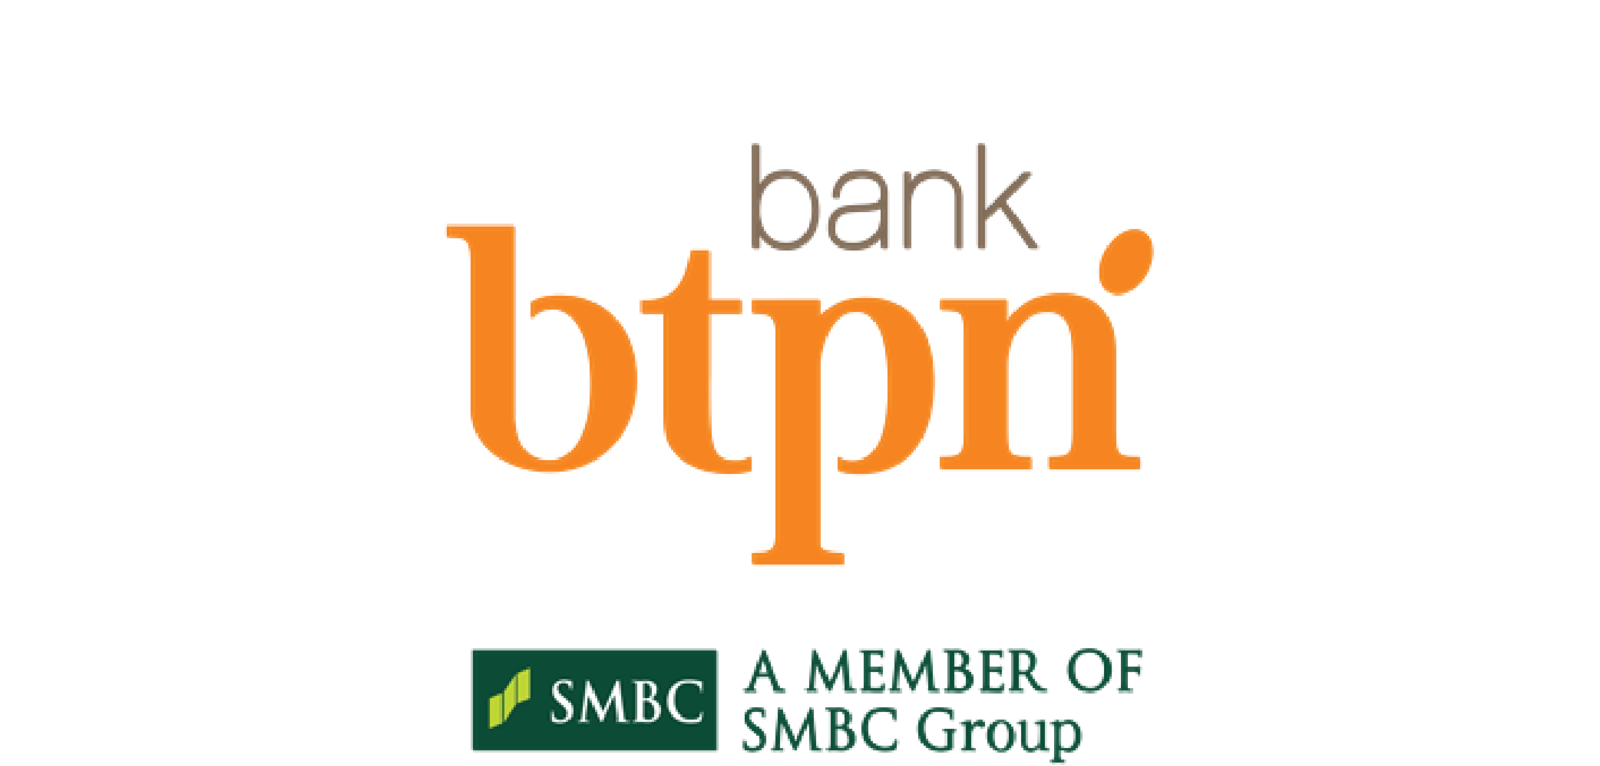 Bank BTPN Logo